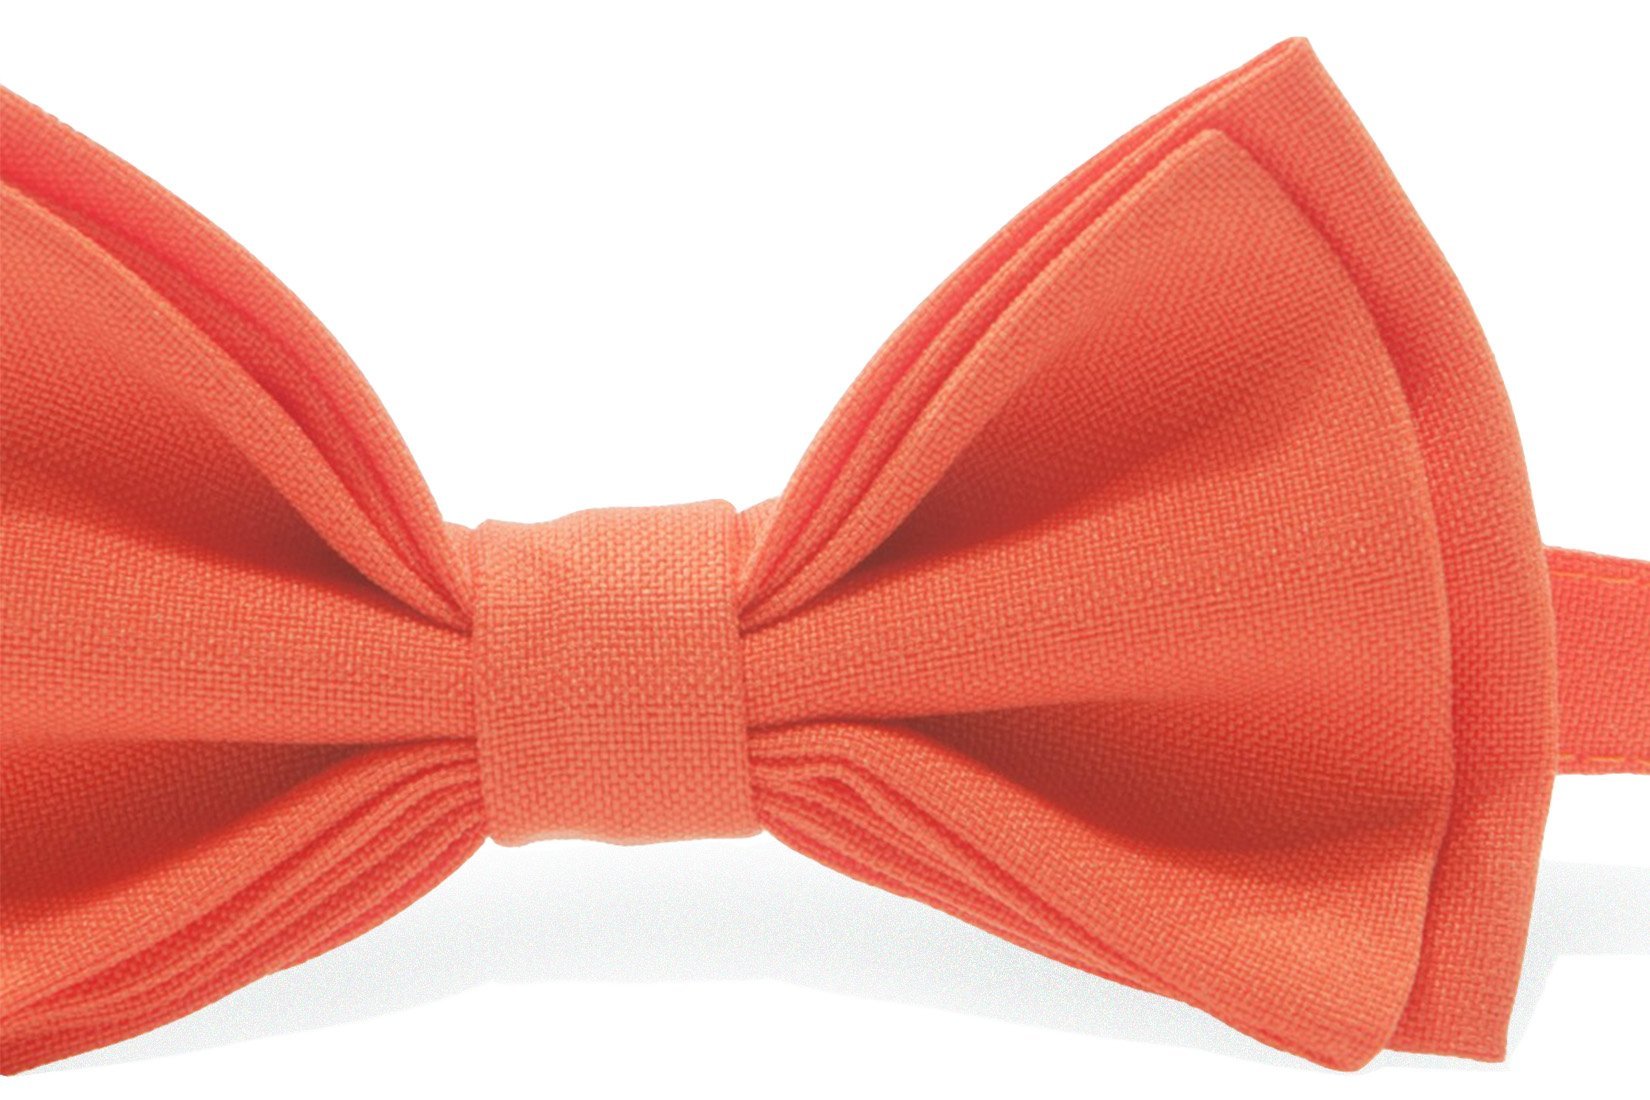 Brown Leather Suspenders & Orange Bow Tie - Baby to Adult Sizes– Armoniia